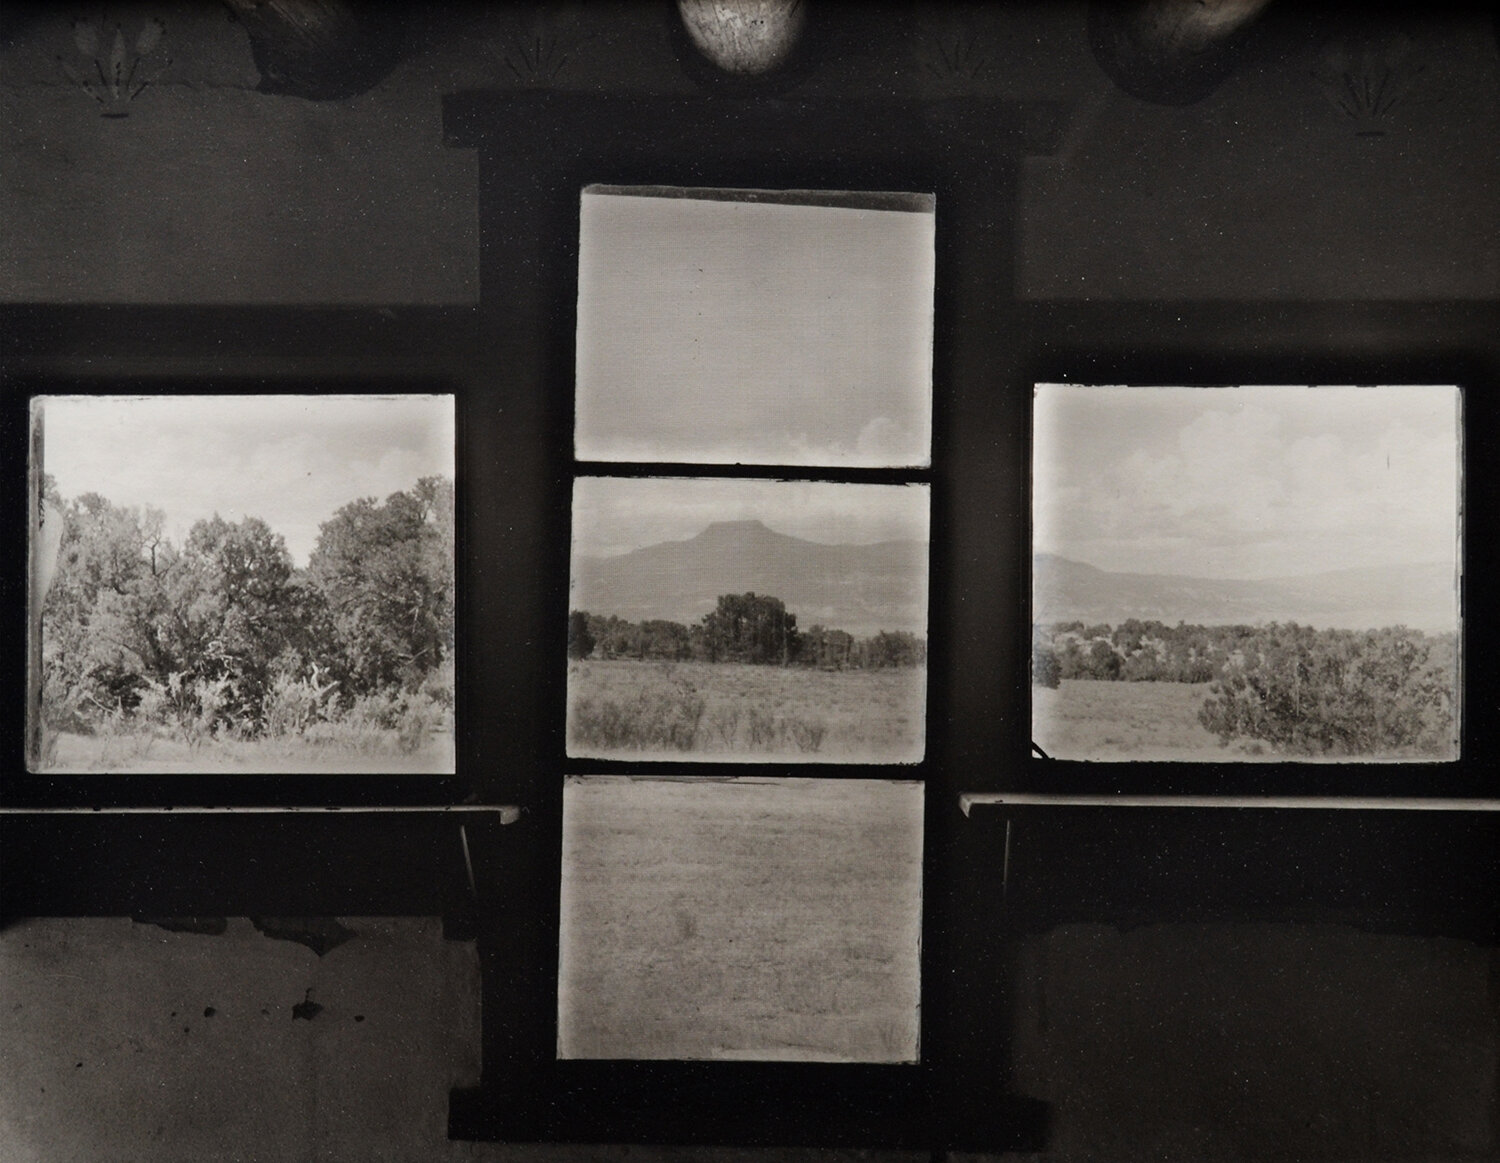 Janet Russek: Living Room Window Looking out at Padernal, Blackie's Place, 1991